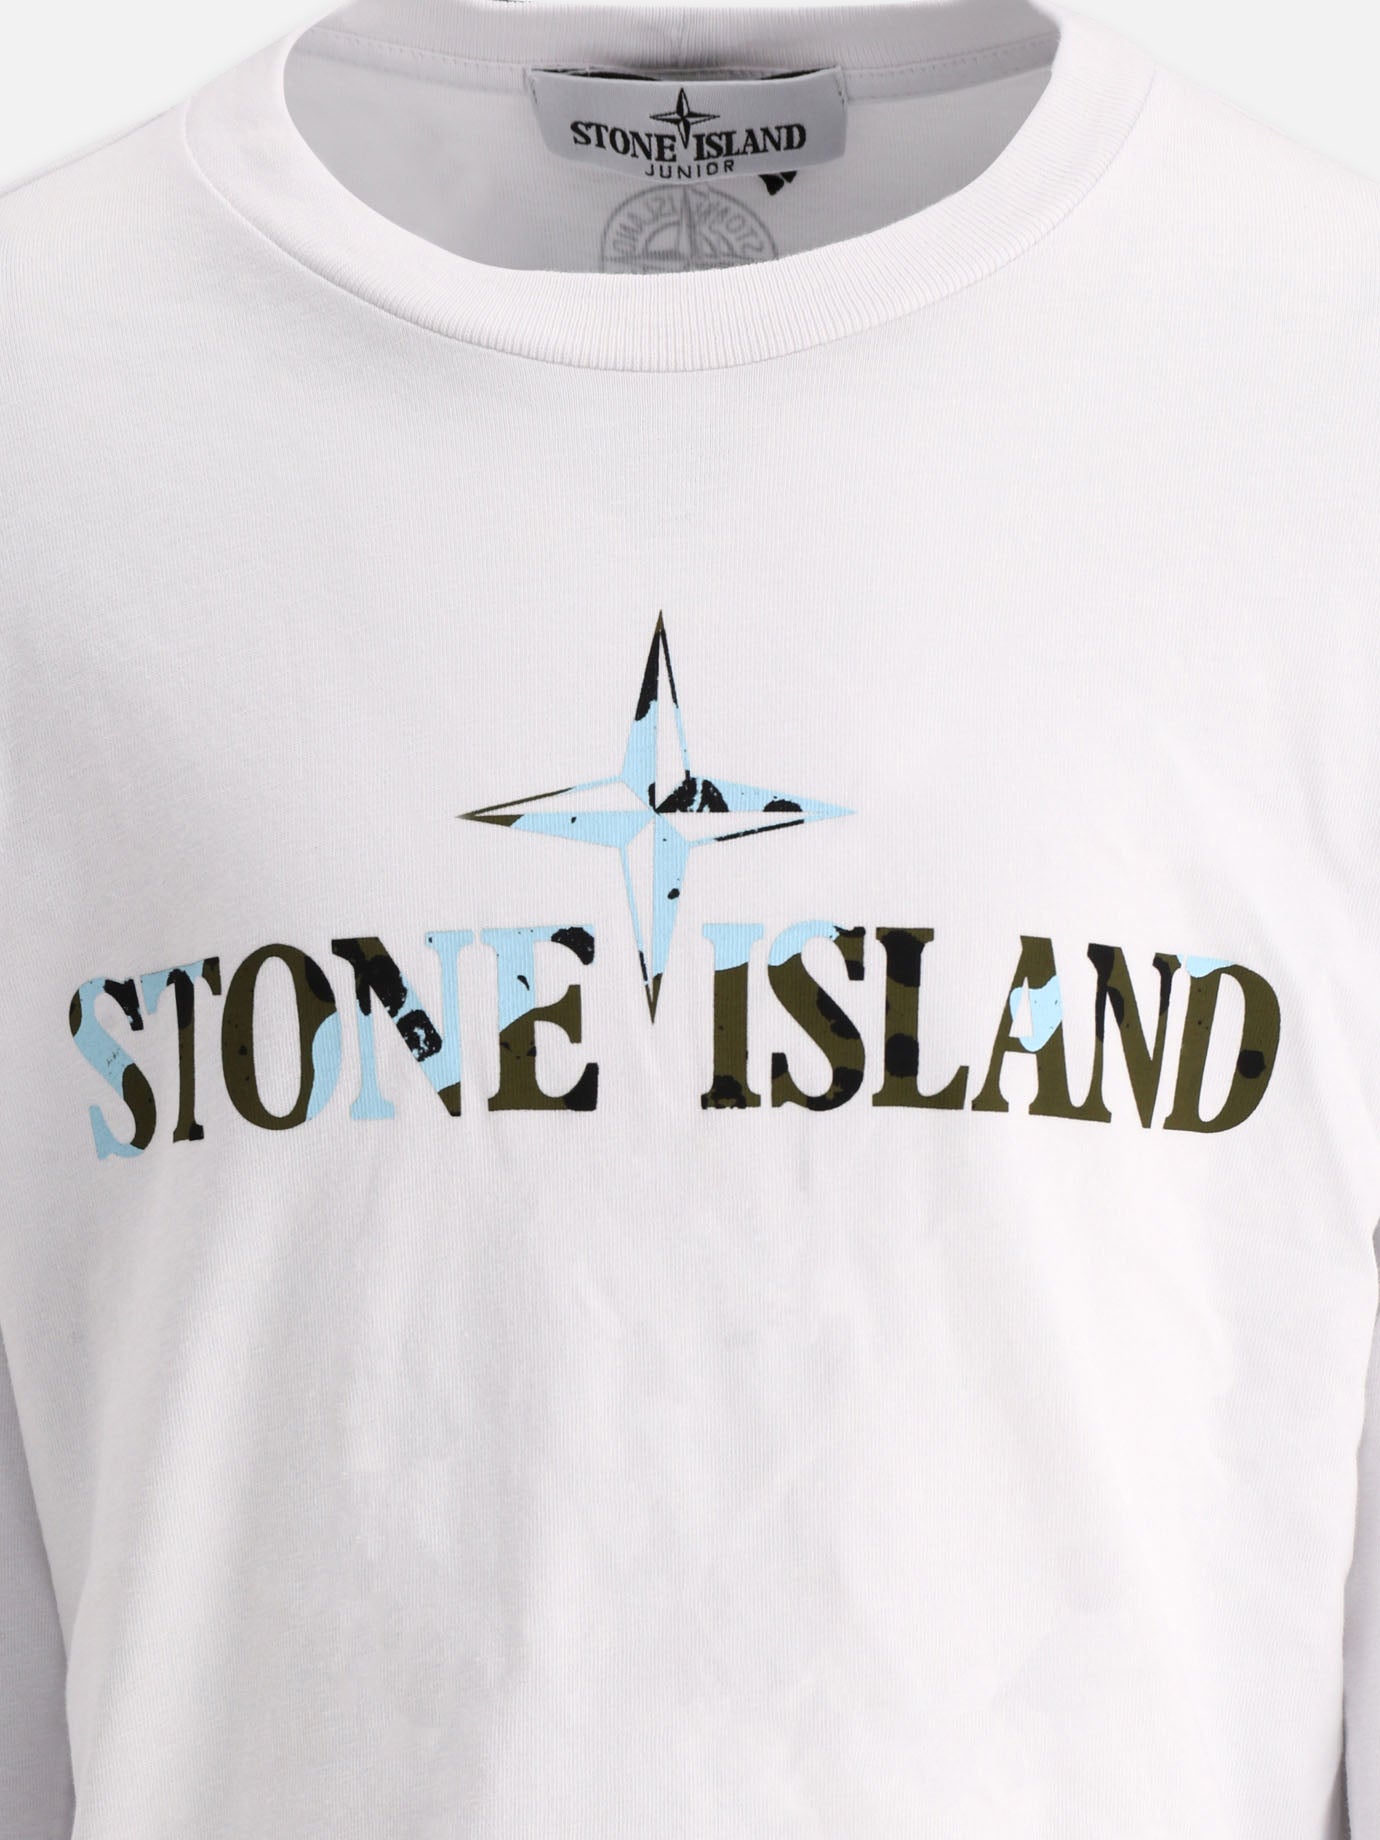 "Stone Island" t-shirt